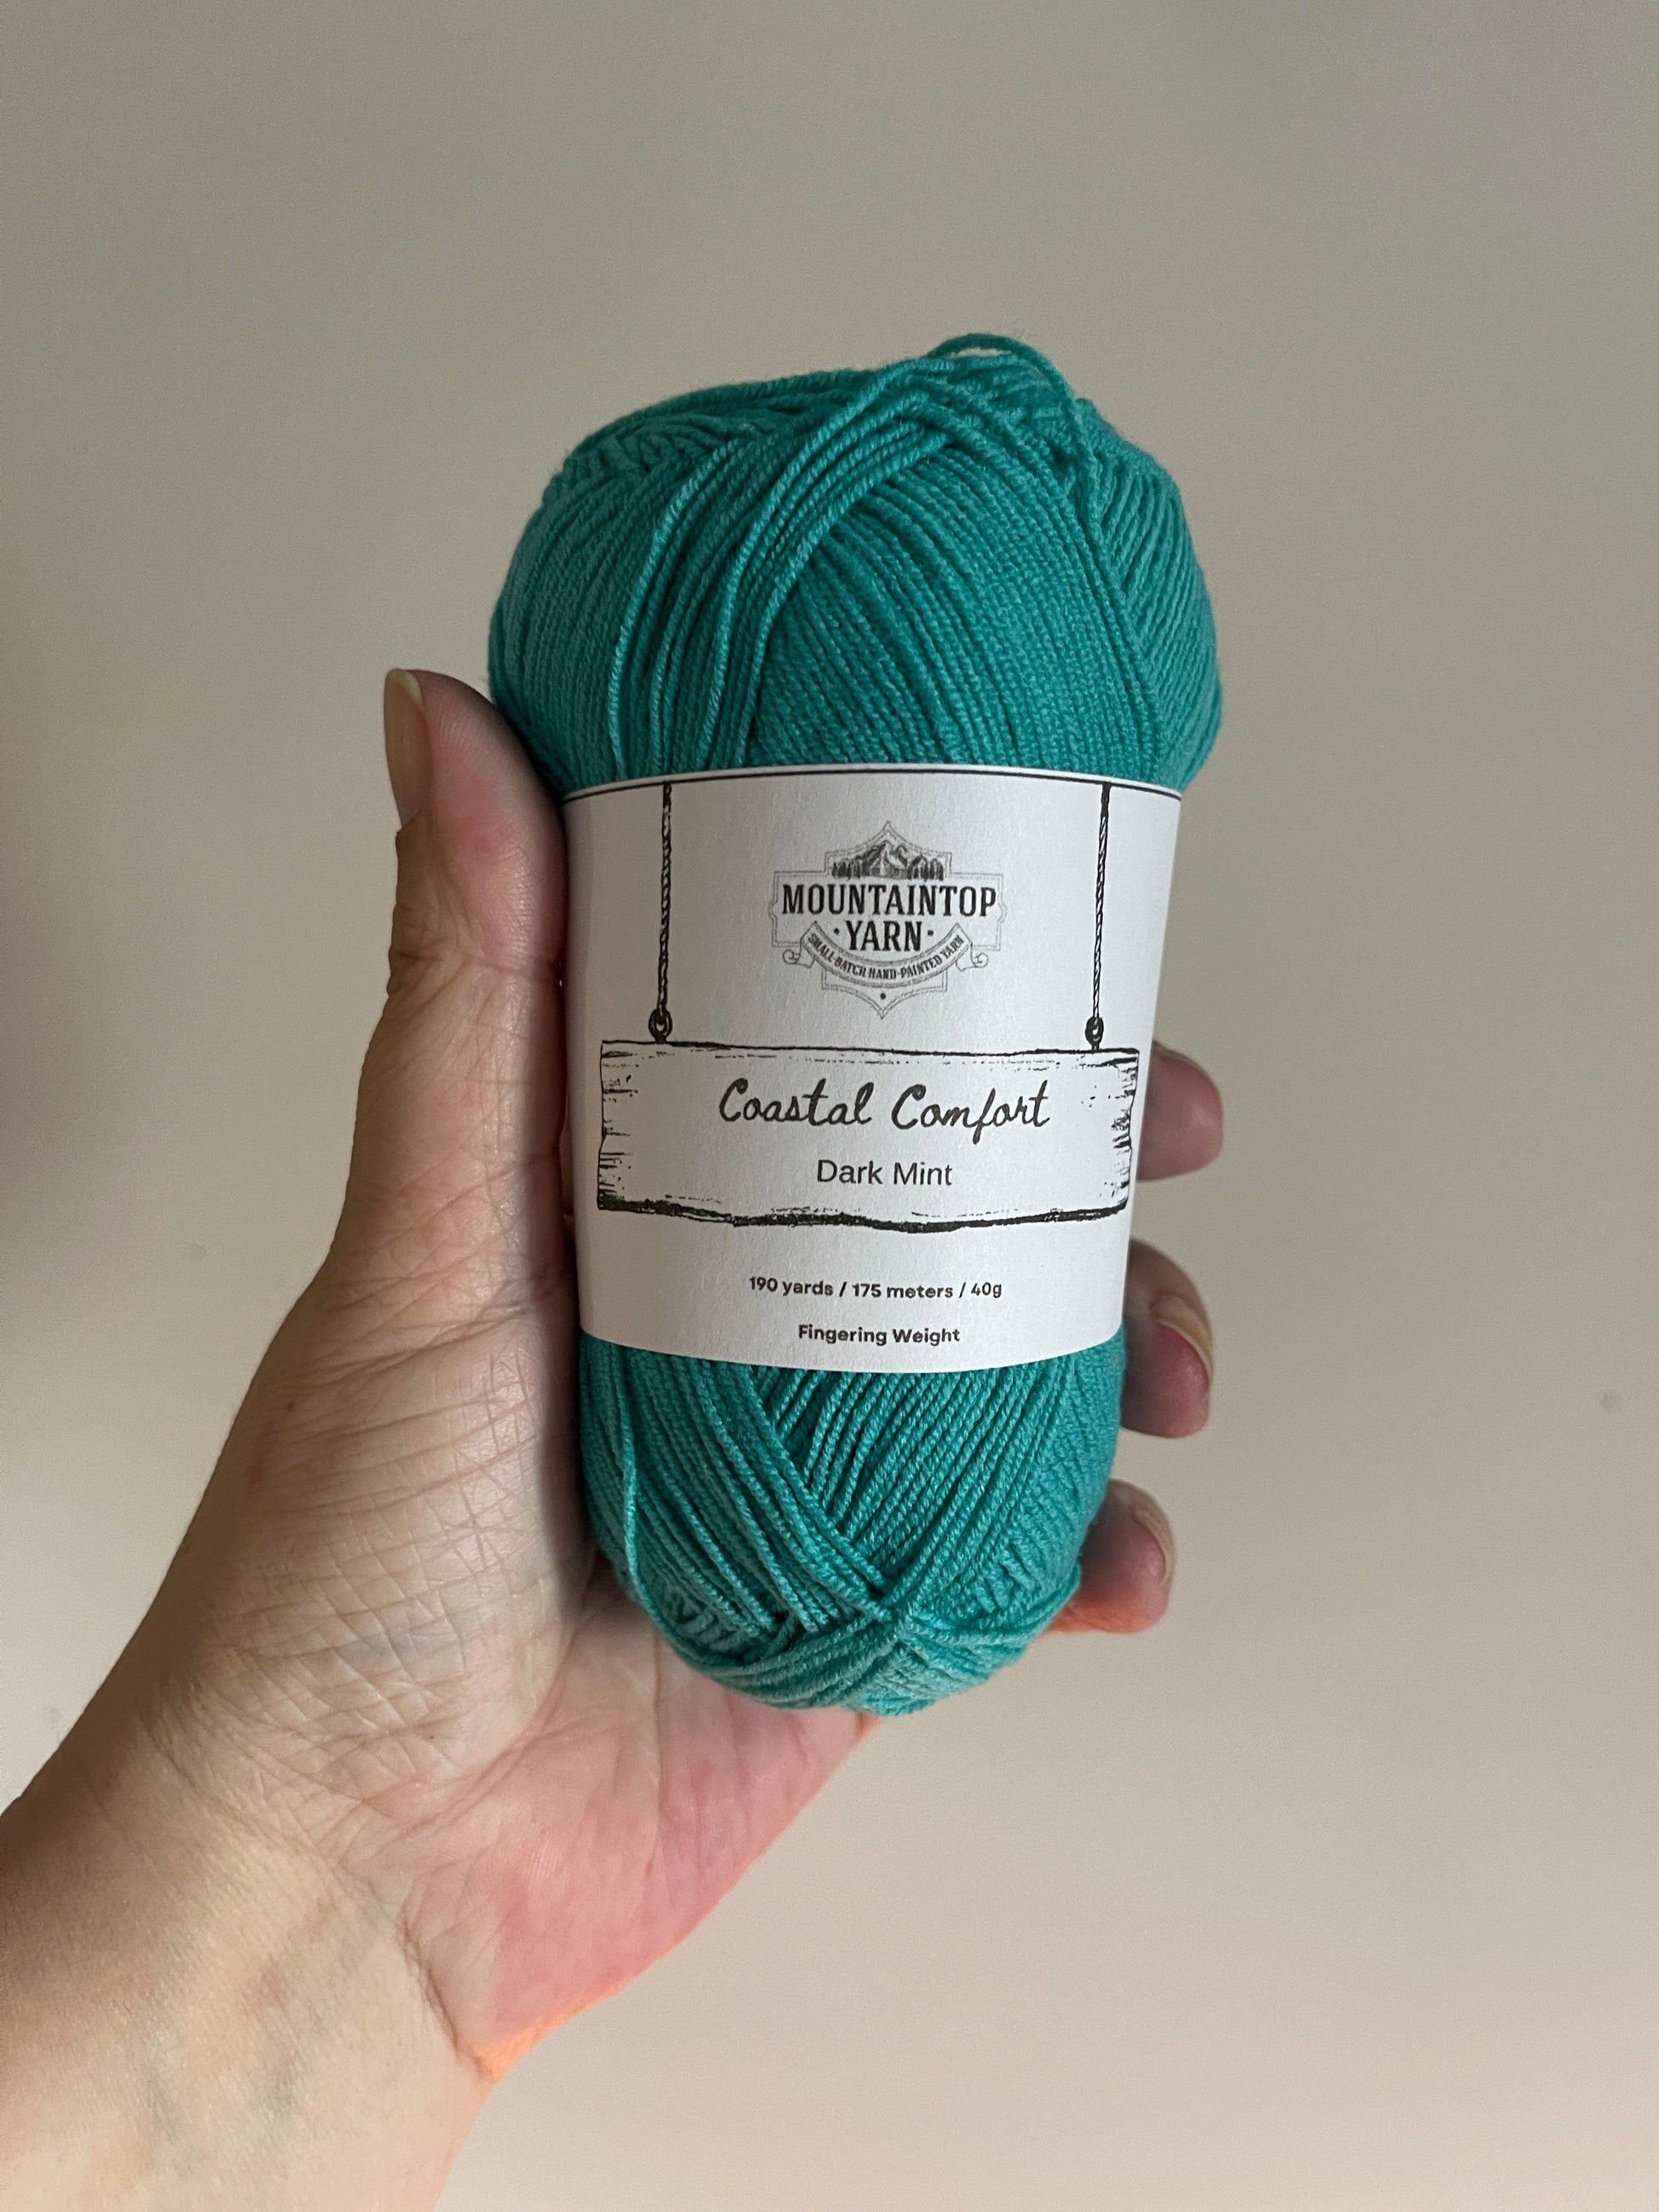 Mountaintop Yarn Dark Mint Coastal Comfort - Cotton and Acrylic Blend Yarn Yarn